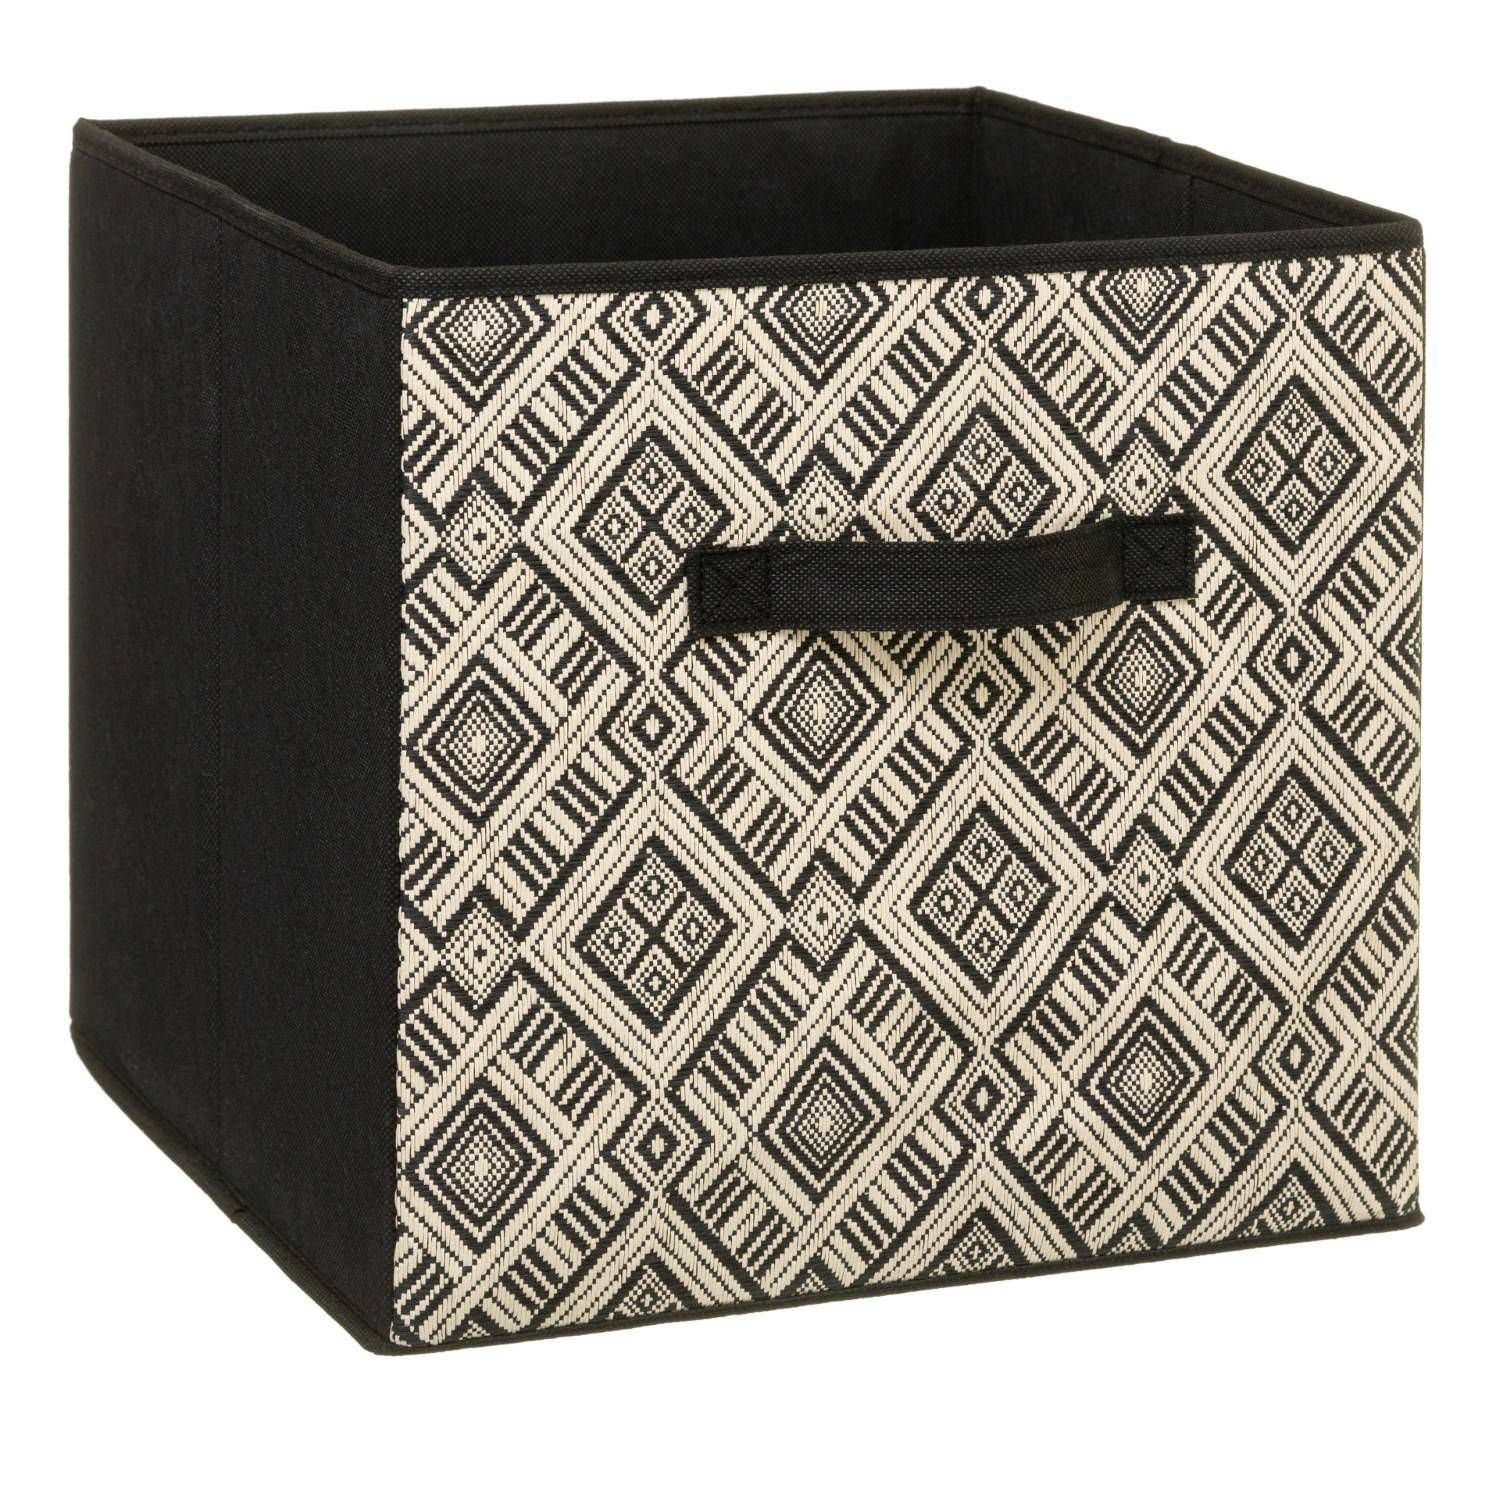 5five Simply Smart Úložný box, textilní ETHNIQUE, 31 x 31 x 31 cm - EMAKO.CZ s.r.o.